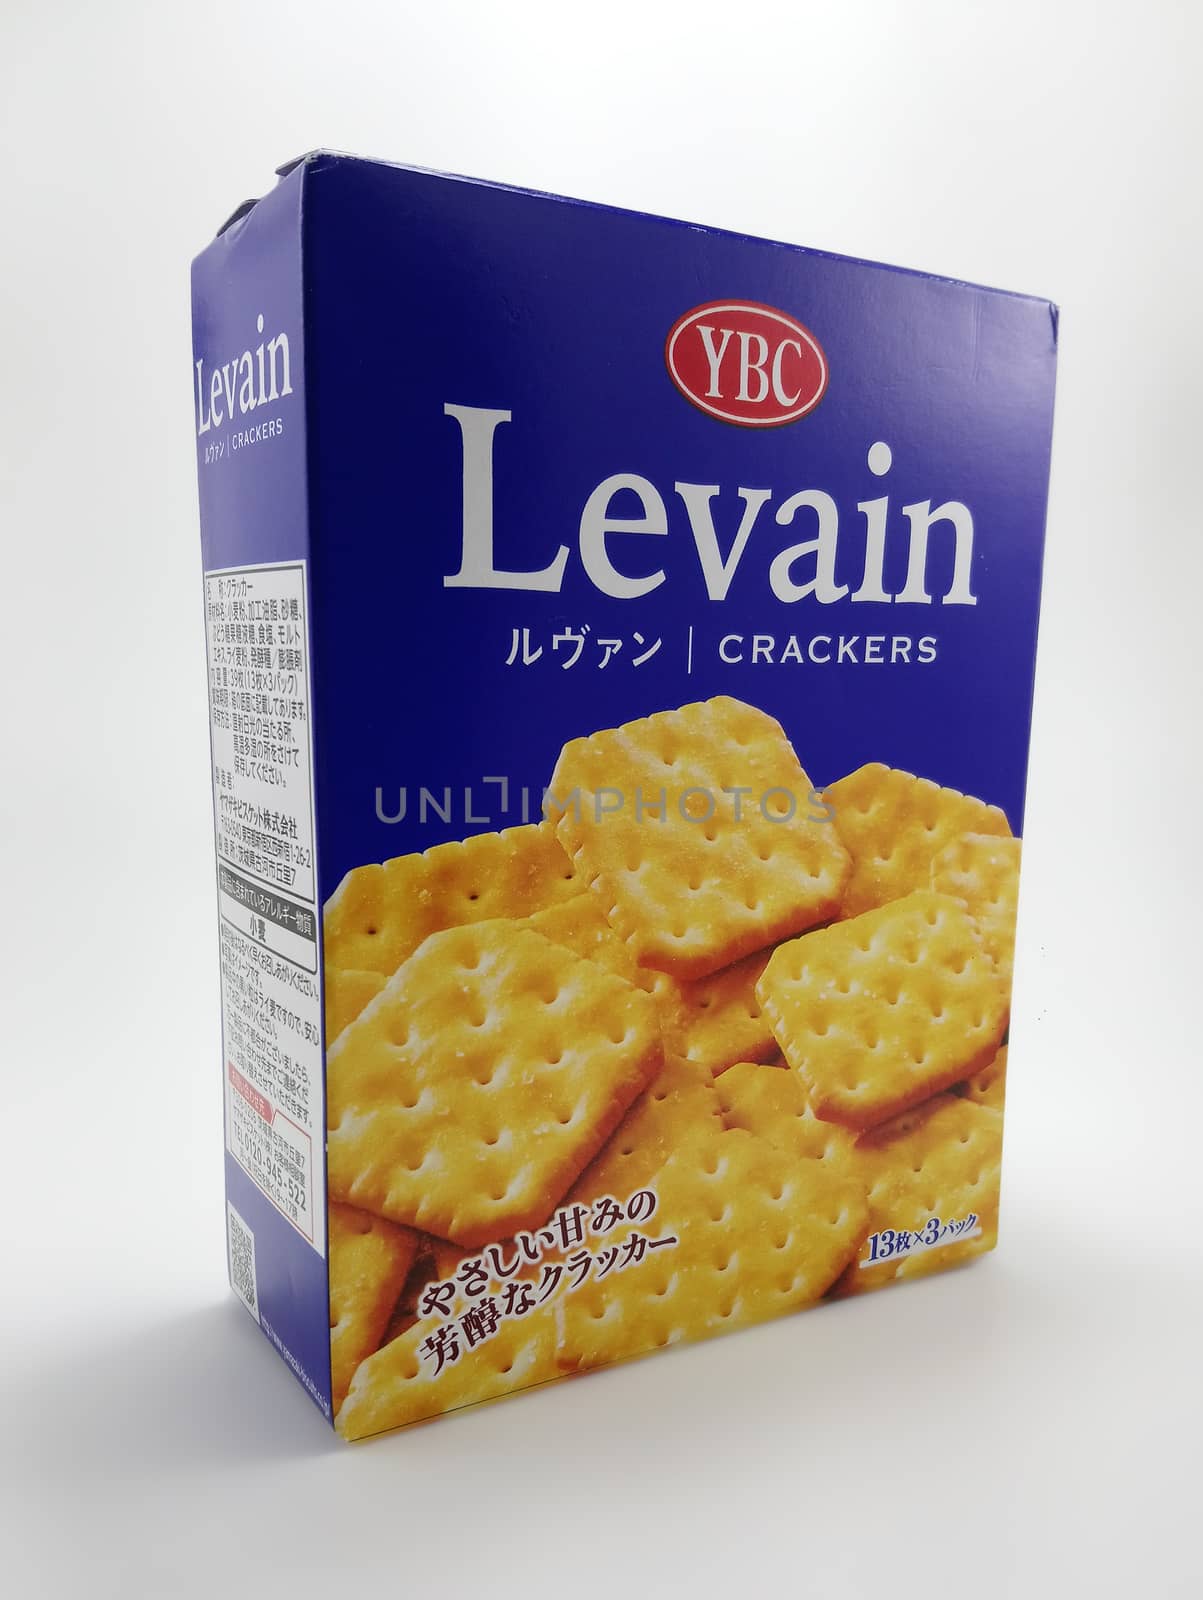 YBC Levain crackers in Manila, Philippines by imwaltersy